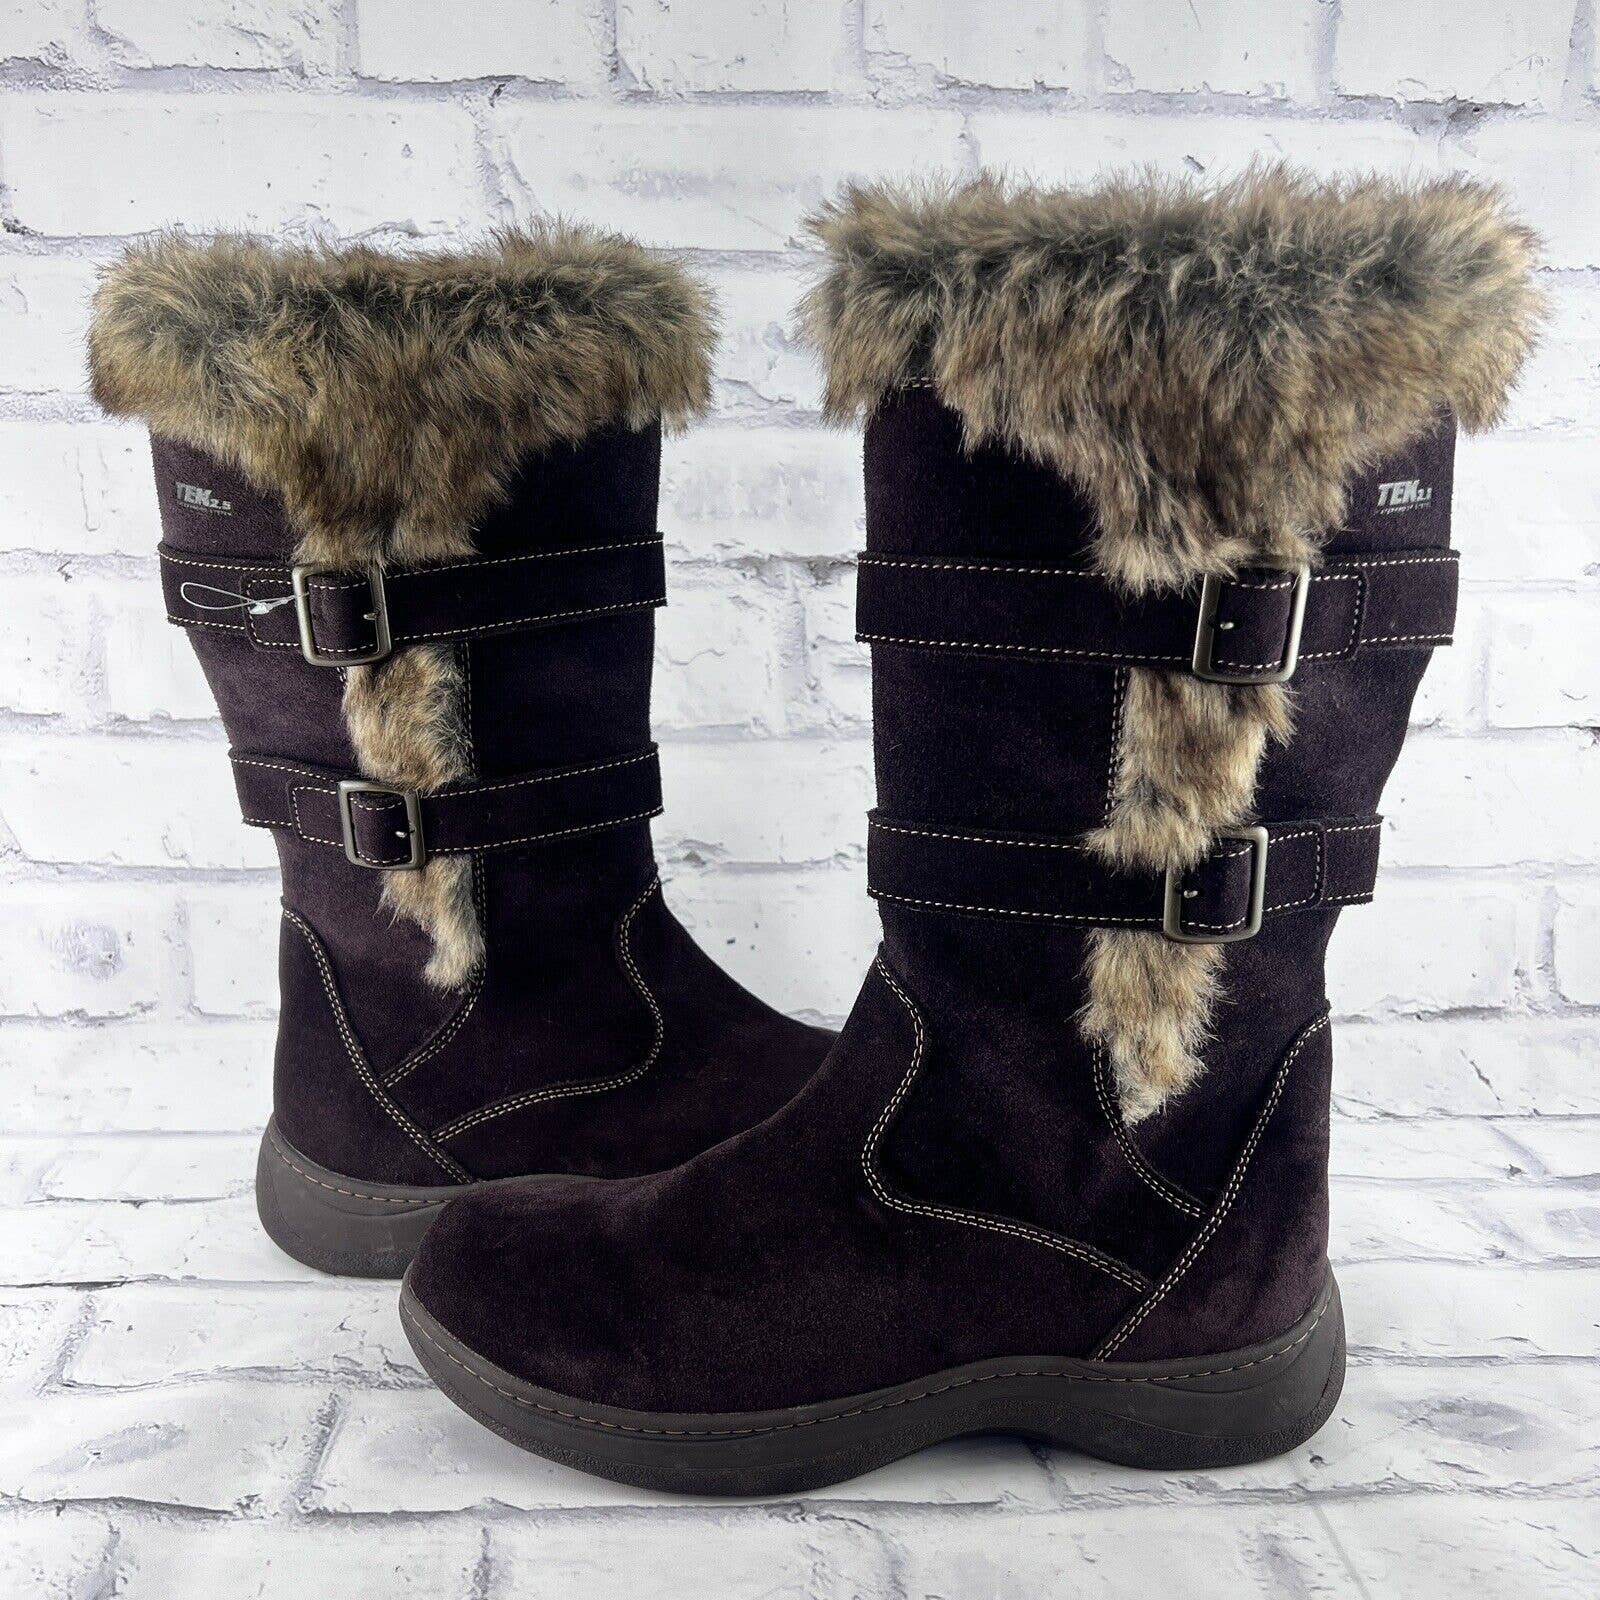 LL Bean Nordic Tek 2.5 Boots Size 9.5 M Brown Suede Fur Trim Waterproof Winter